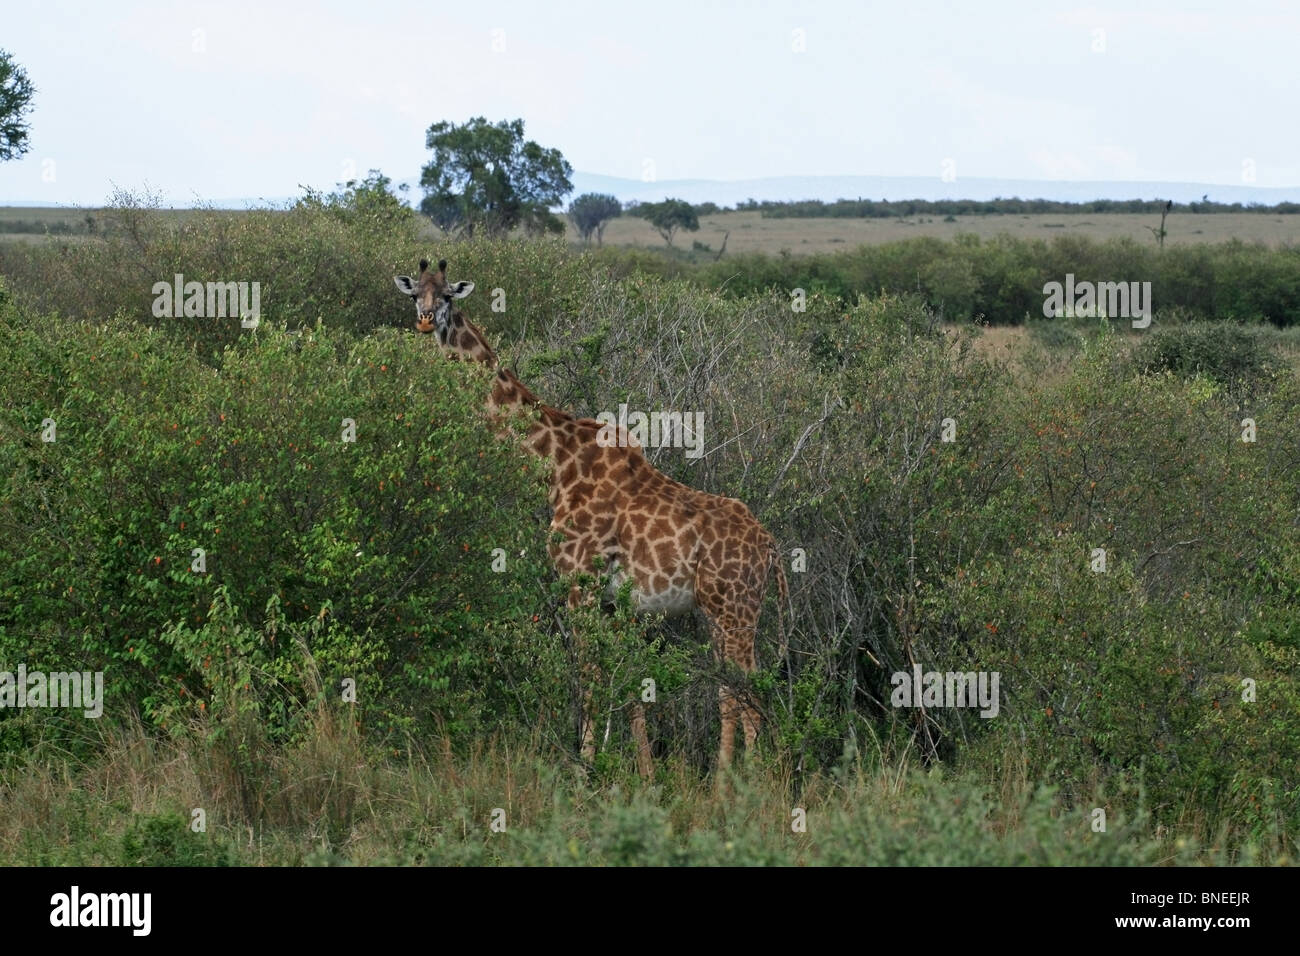 A Masai Giraffe standing in Masai Mara National Reserve, Kenya, East Africa Stock Photo